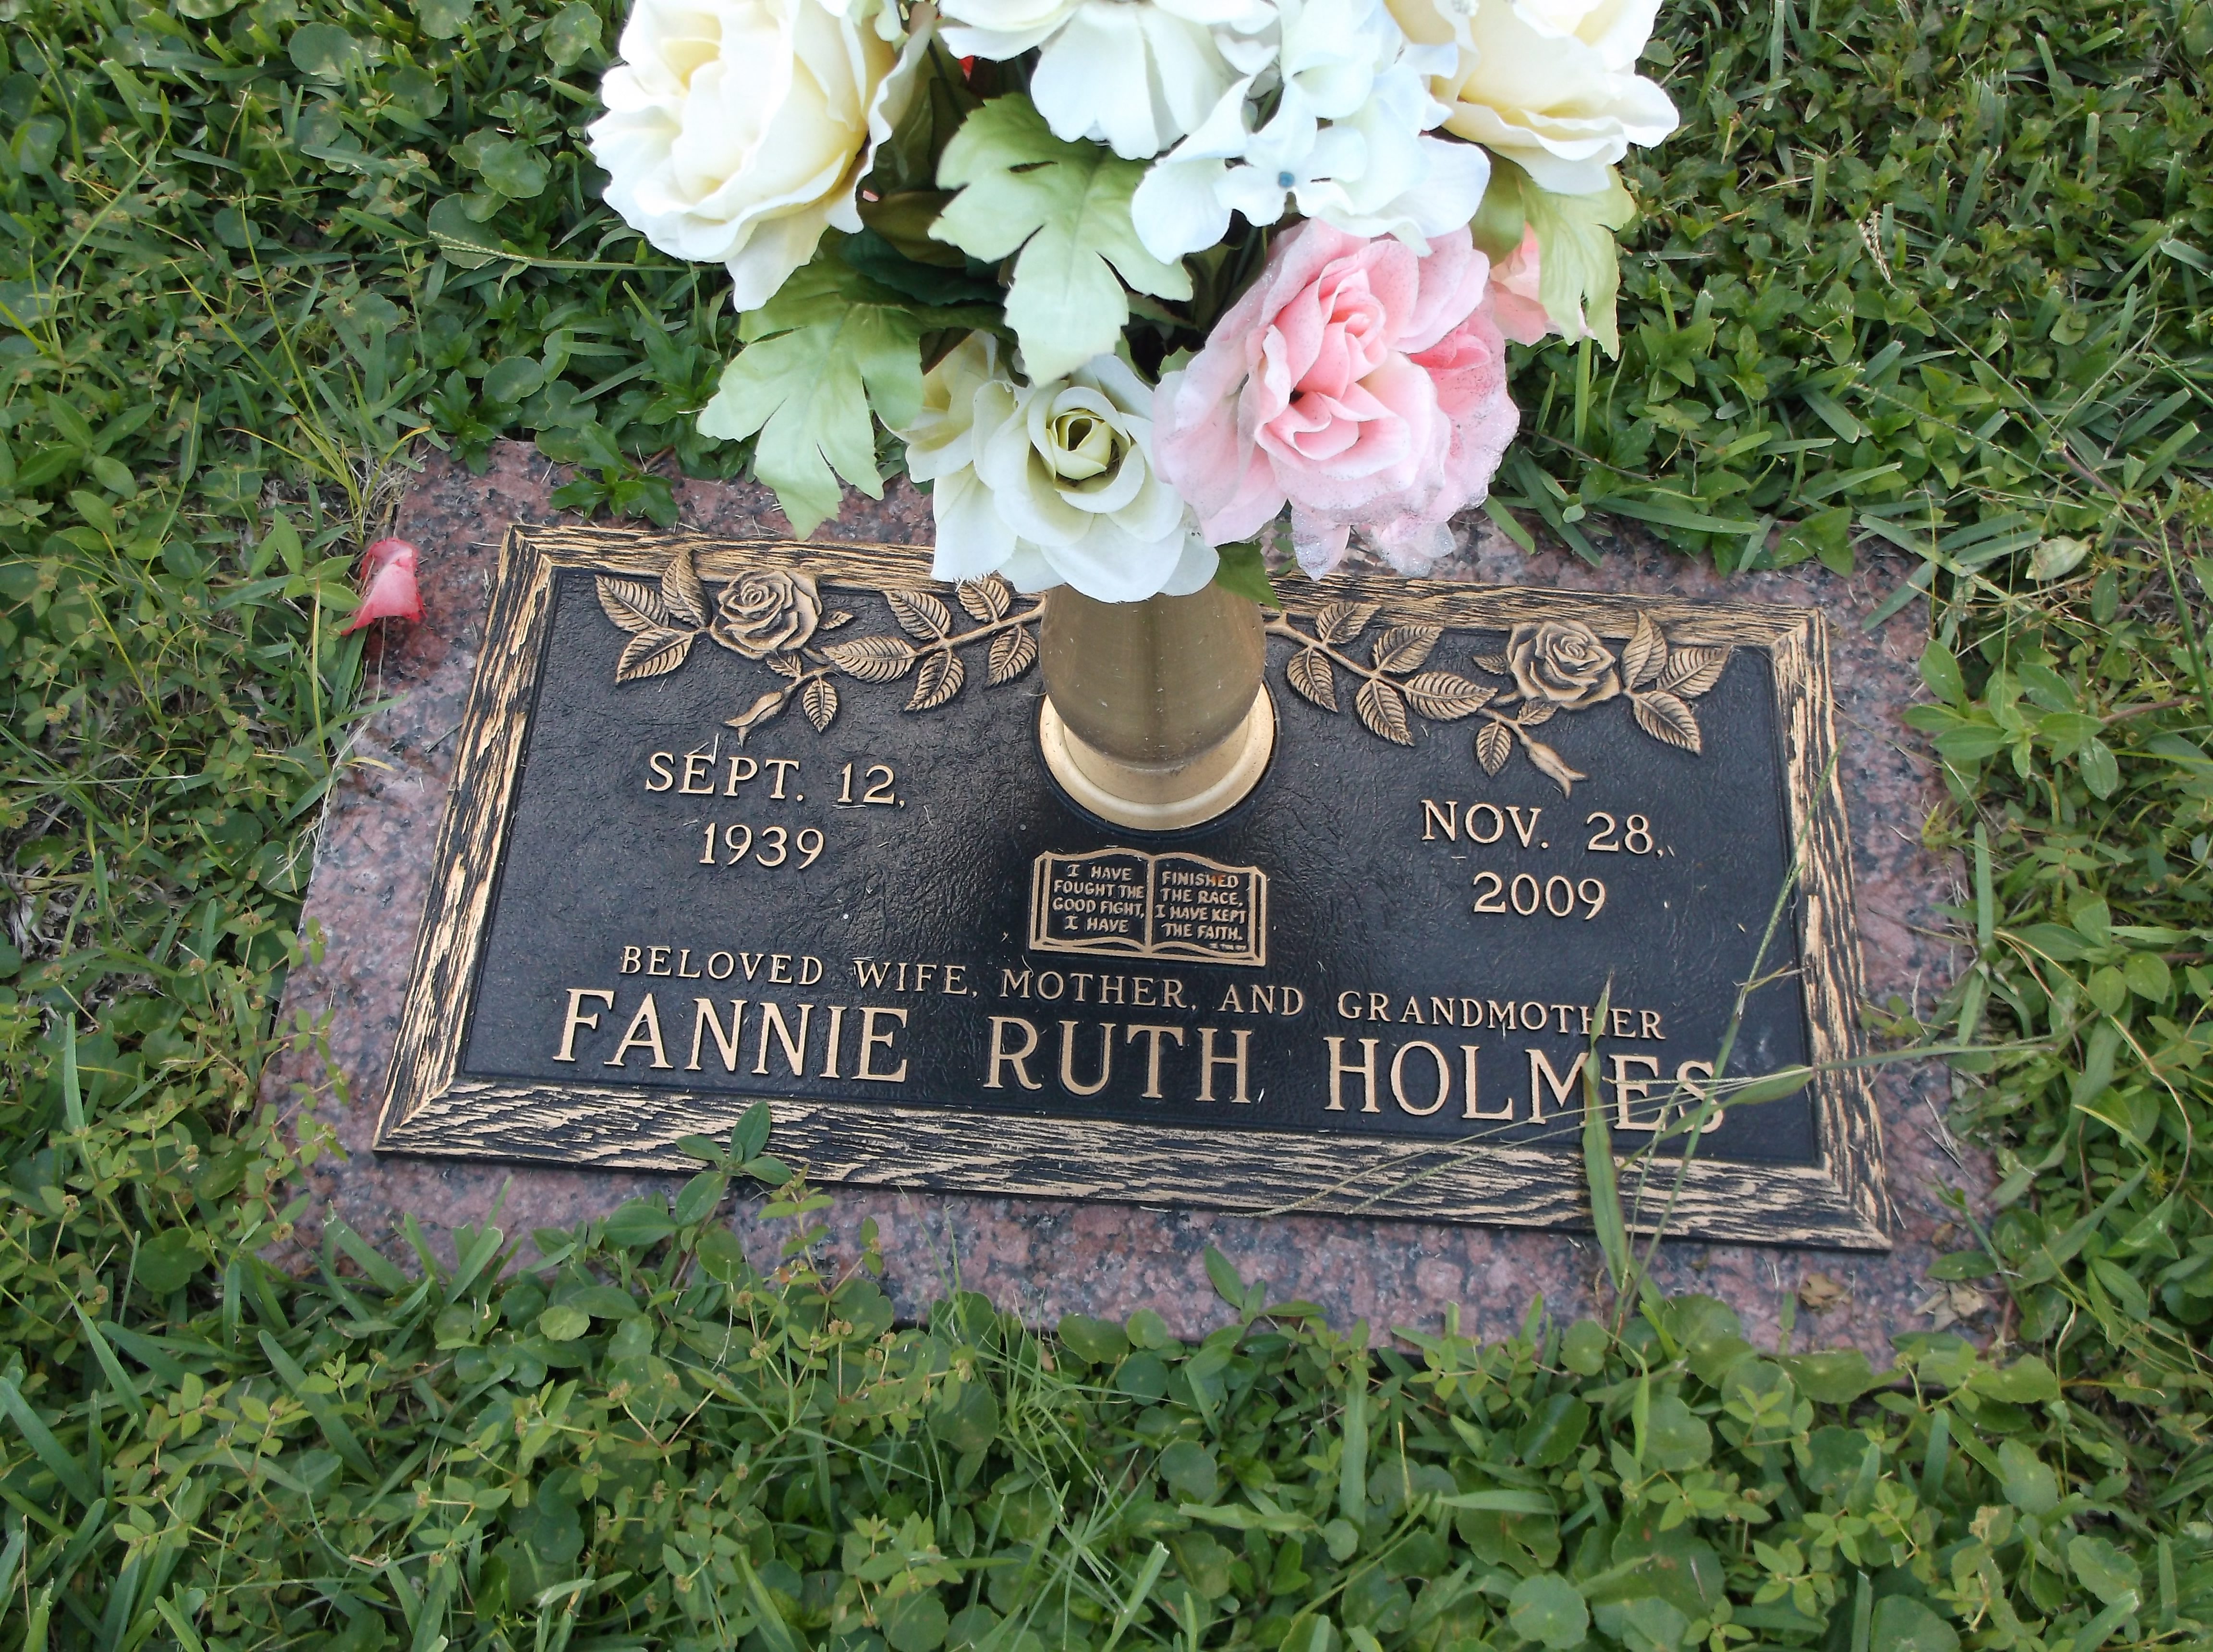 Fannie Ruth Holmes